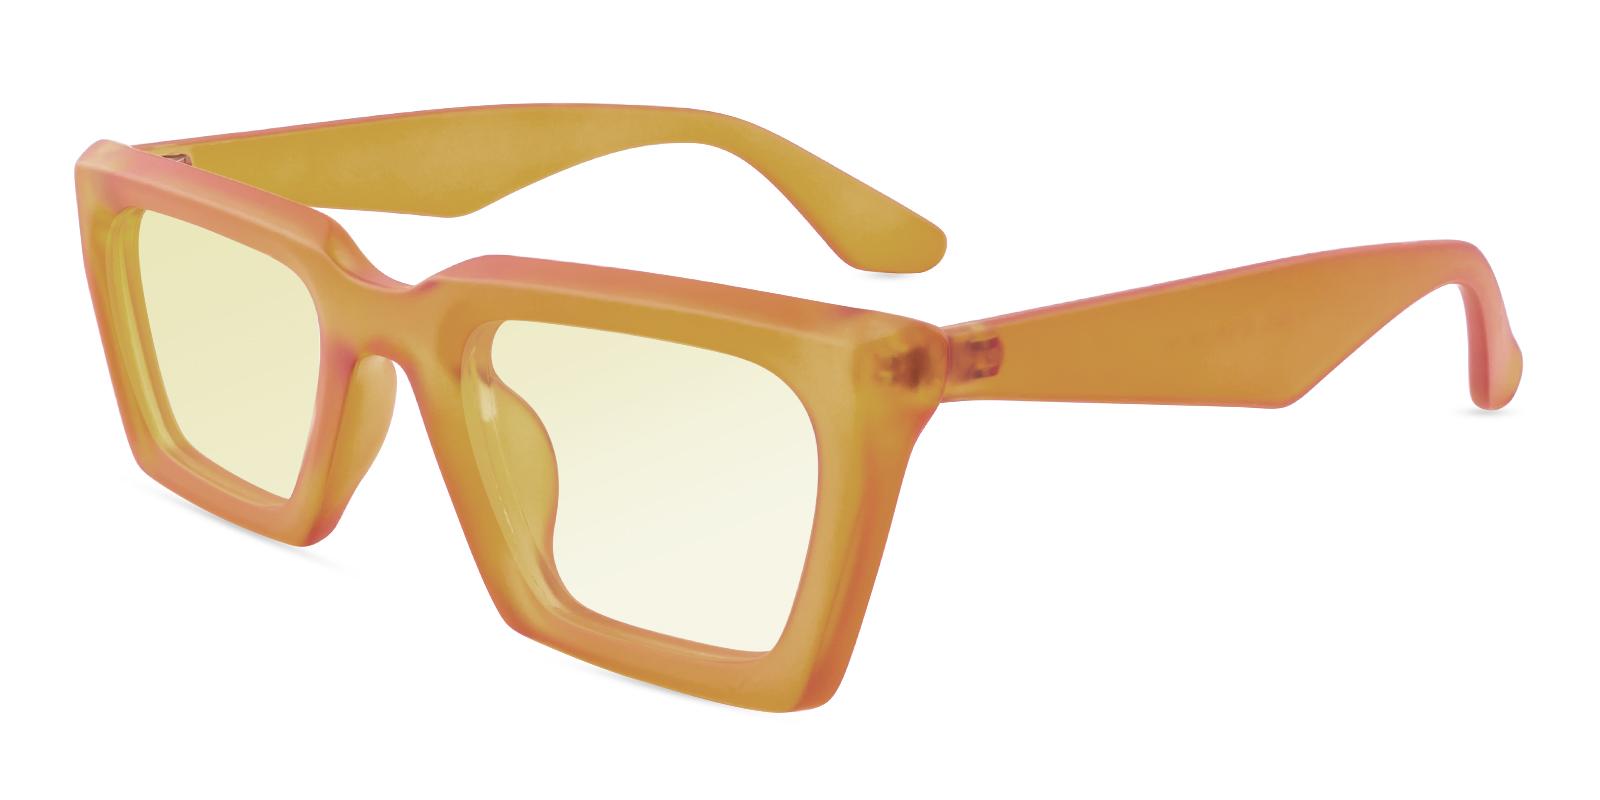 Memorthen Orange Acetate Sunglasses , UniversalBridgeFit Frames from ABBE Glasses